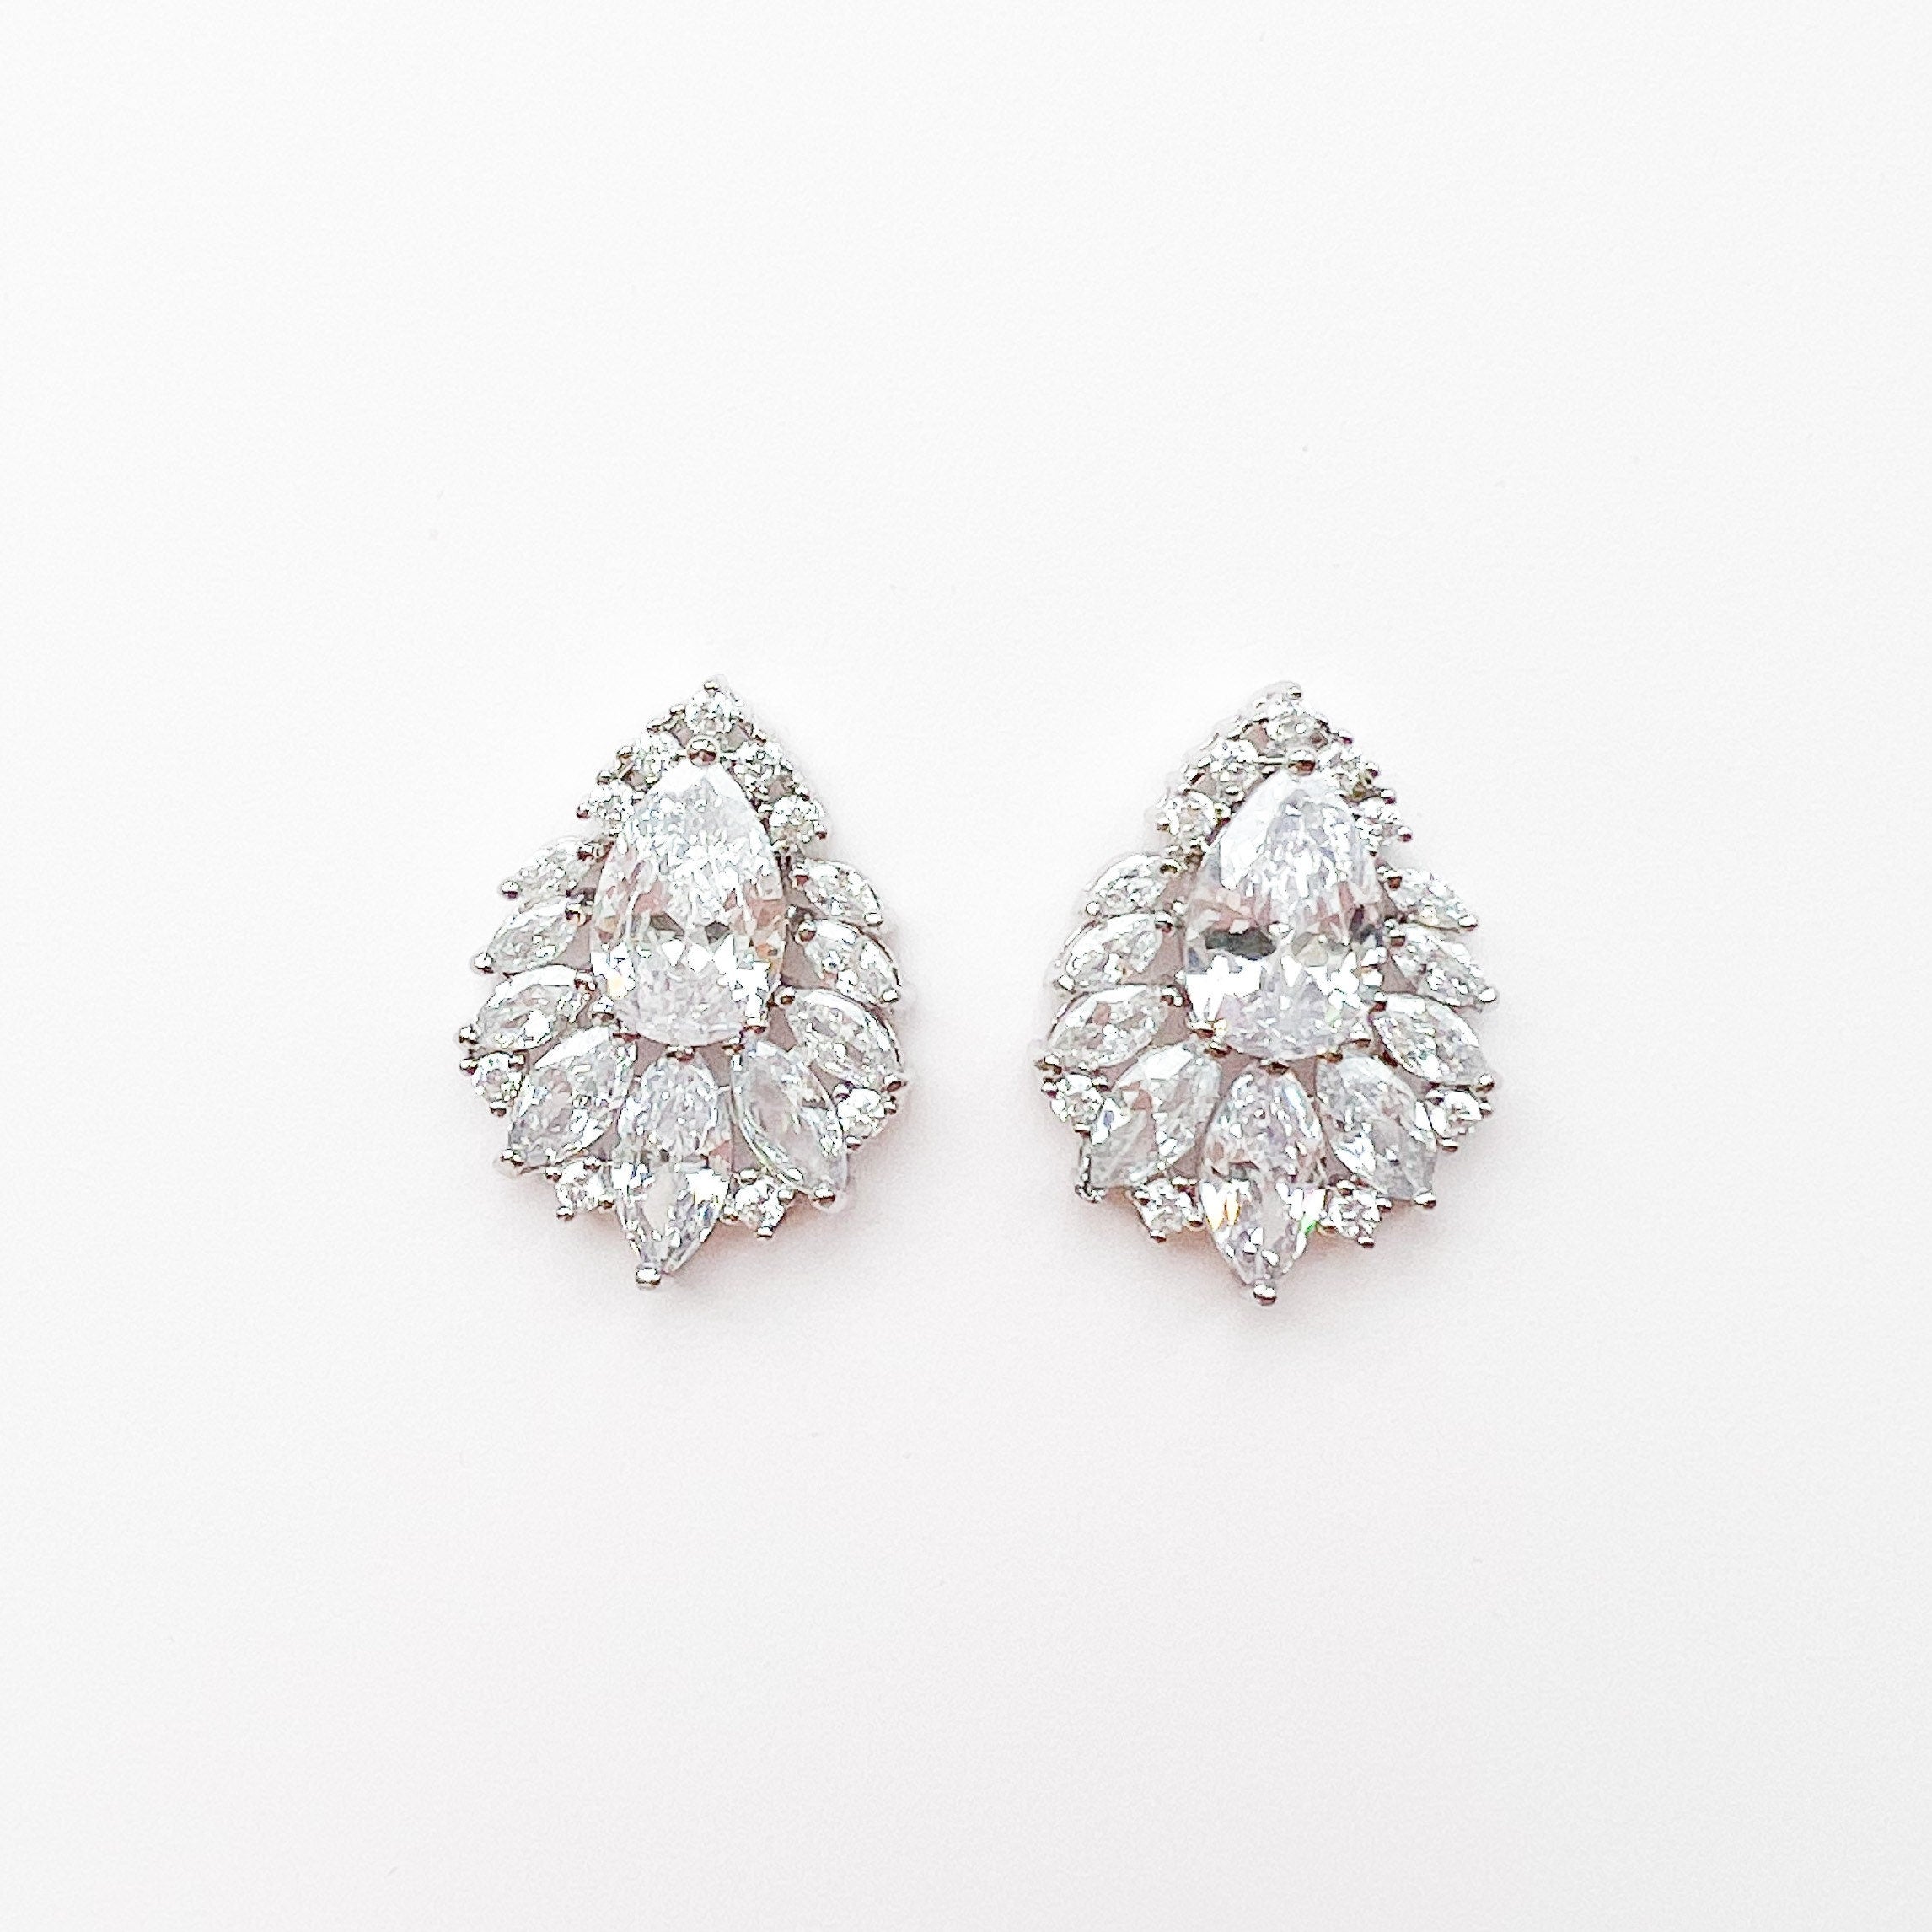 MOLLY // Silver cluster stud earrings